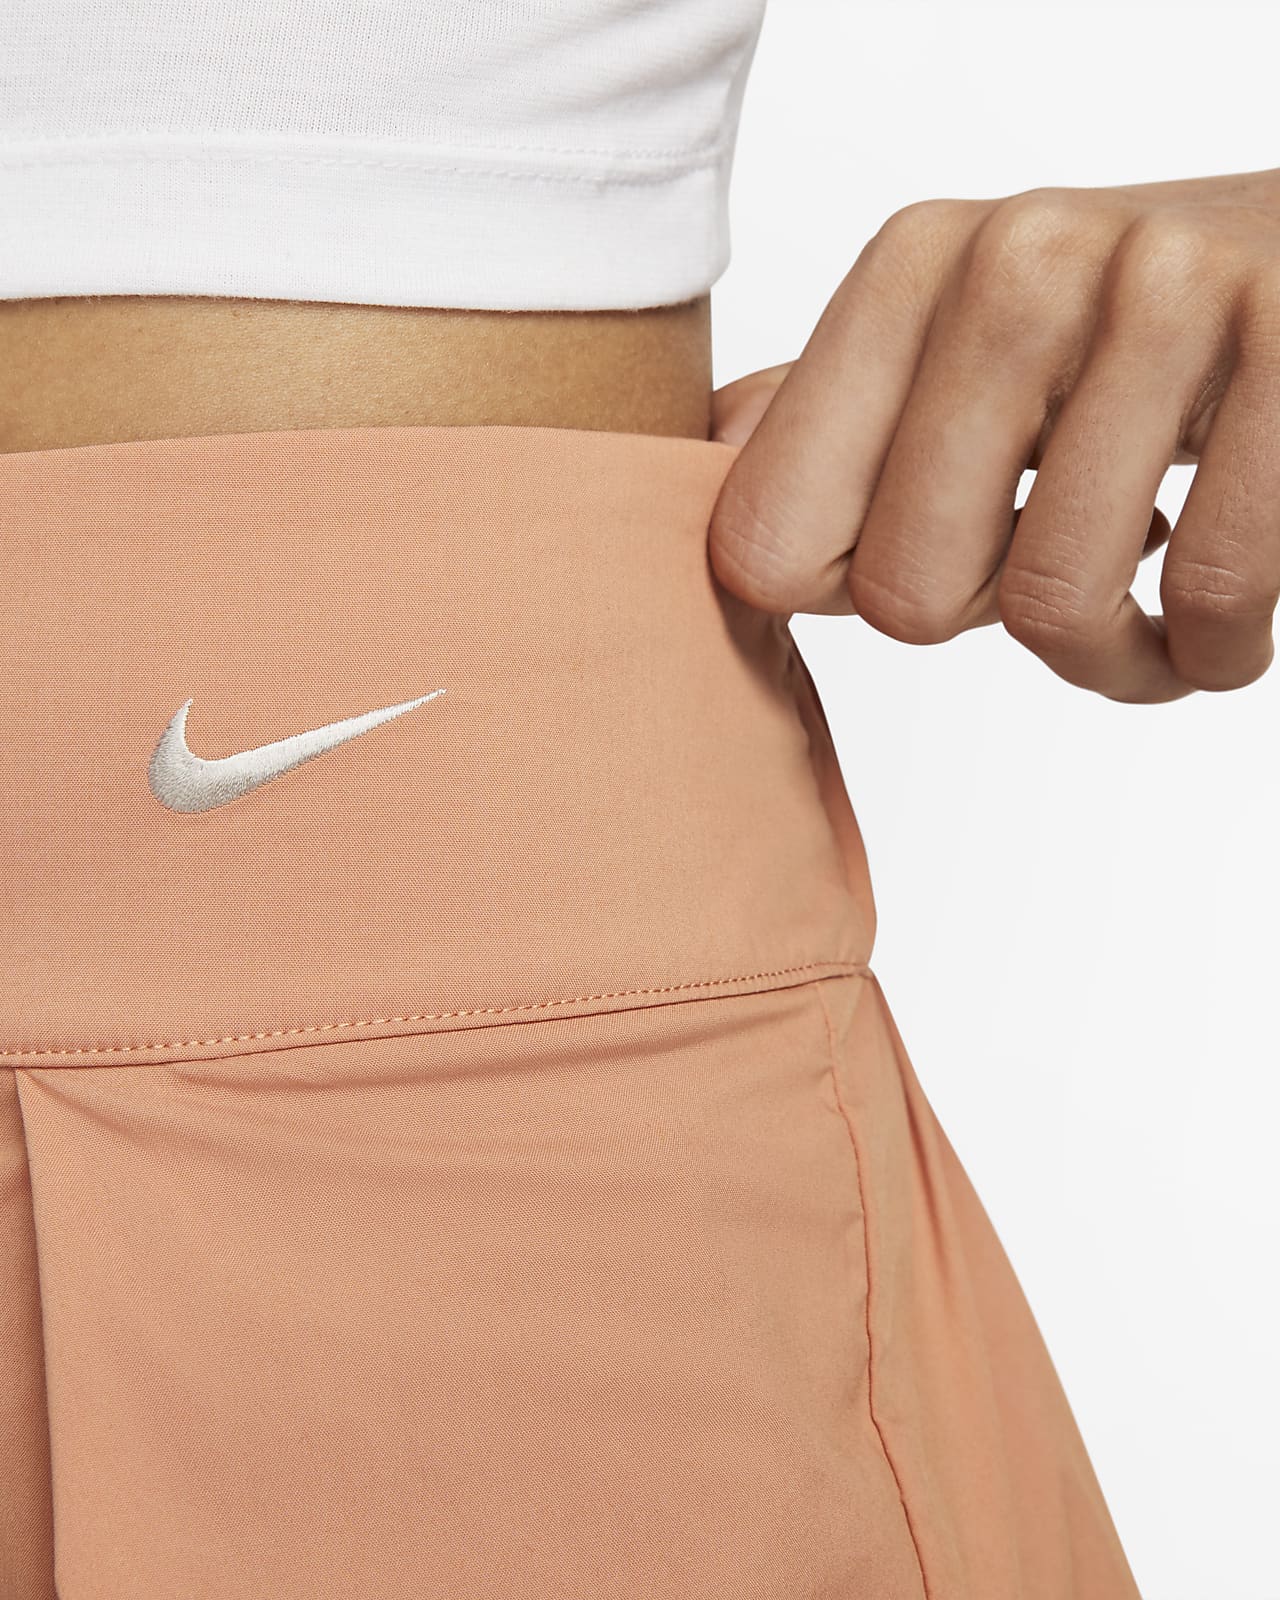 Collection Trouser Sportswear Women\'s Shorts. Nike